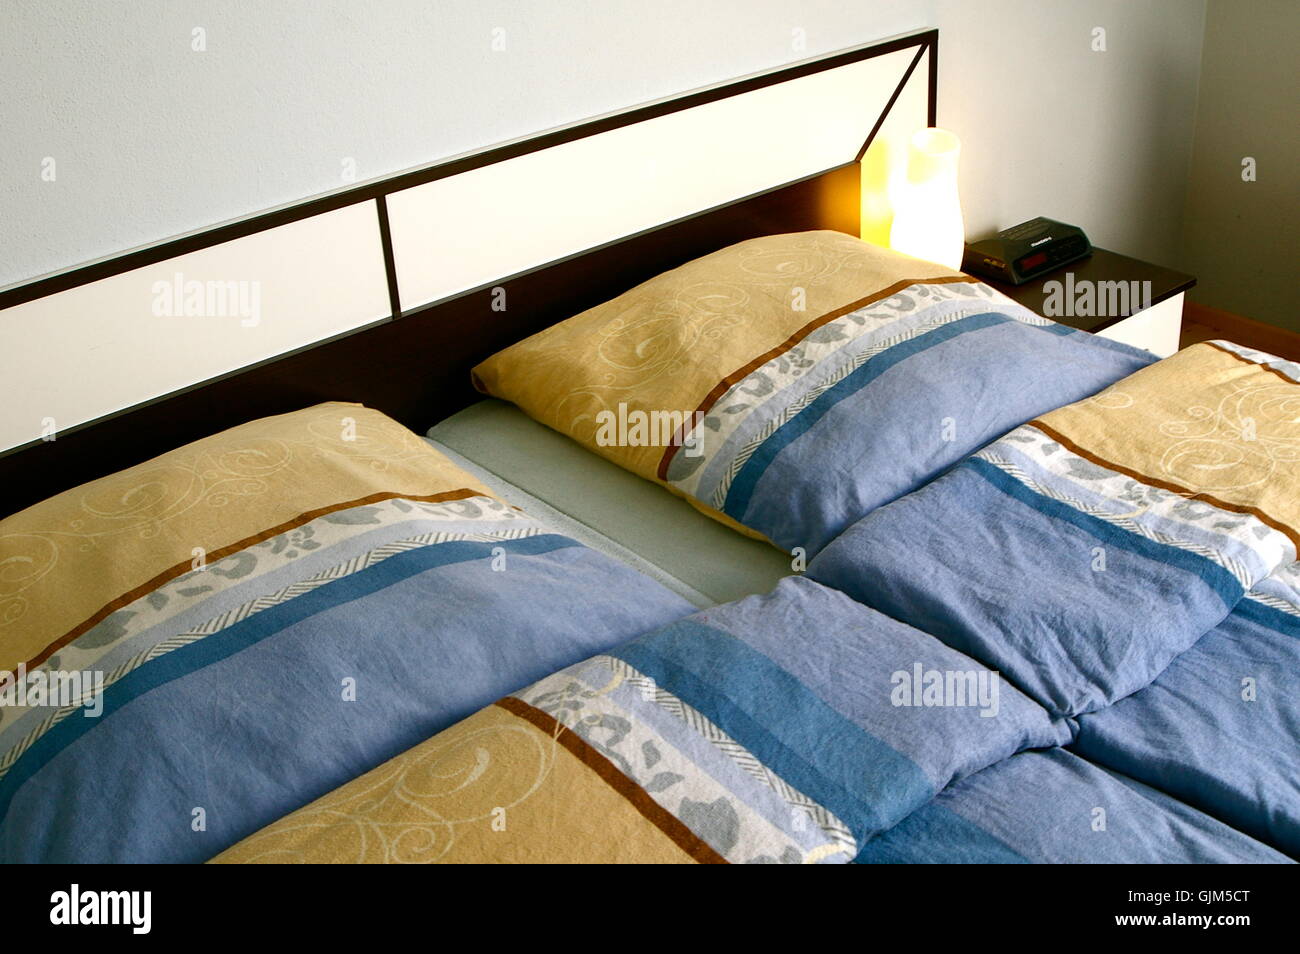 https://c8.alamy.com/comp/GJM5CT/bedroom-feather-bed-bedclothes-GJM5CT.jpg